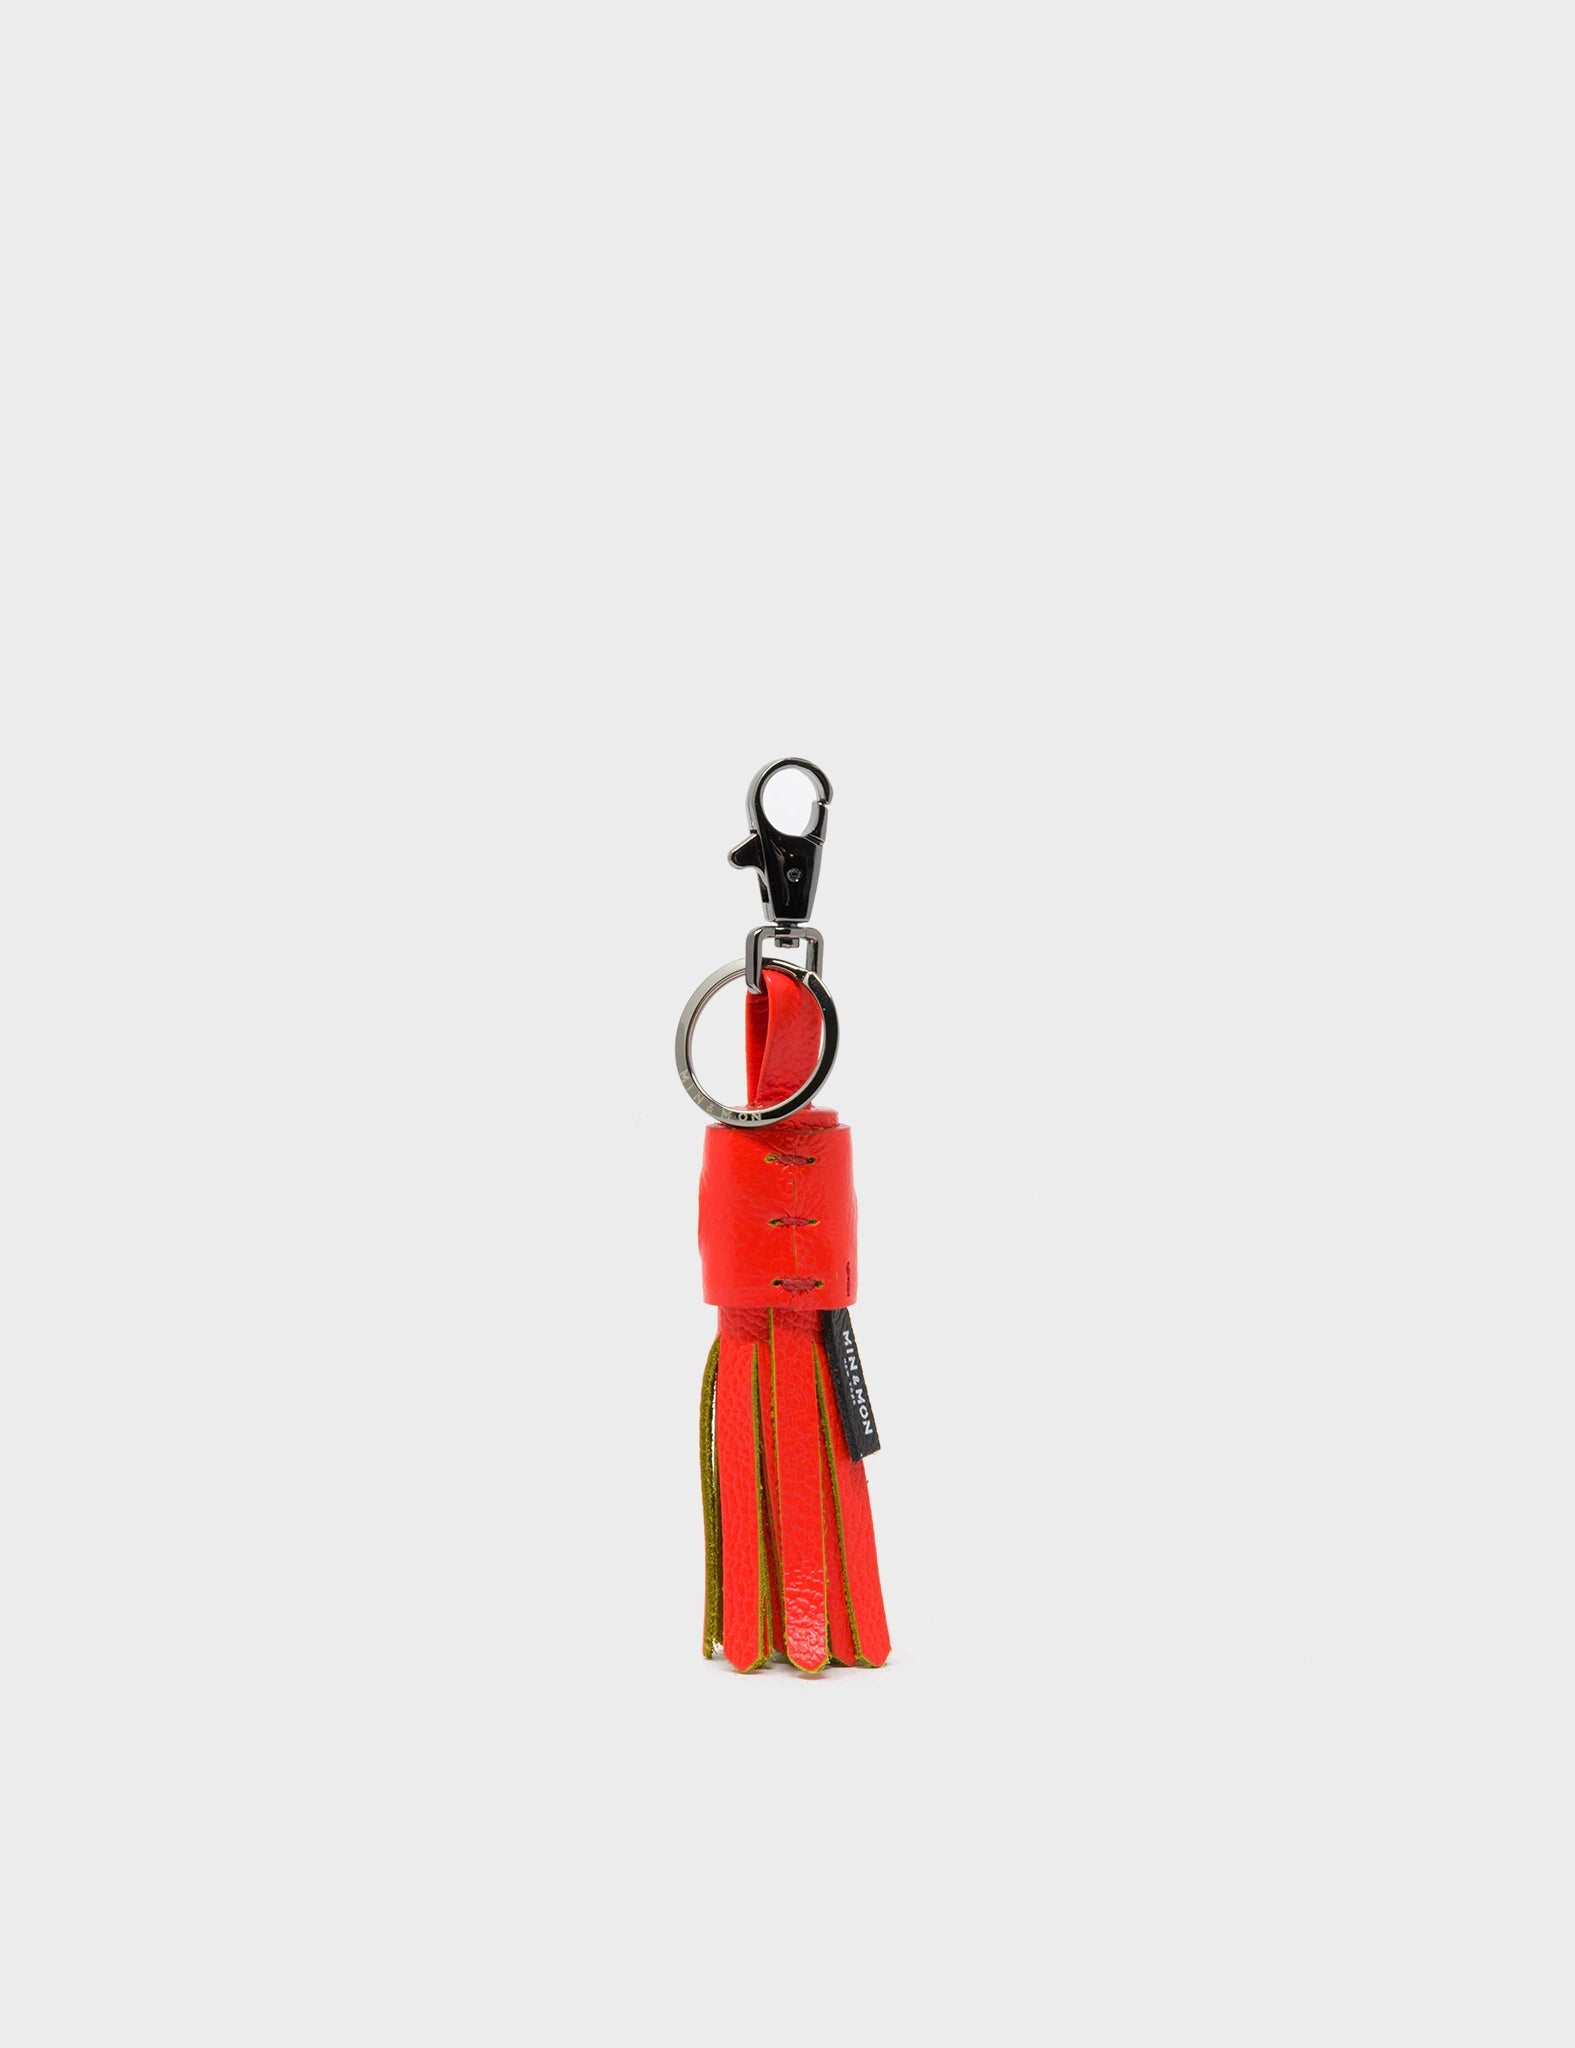 Tassel Squid Callie Marie Hue Charm - Fiesta Red Leather Keychain - Back 